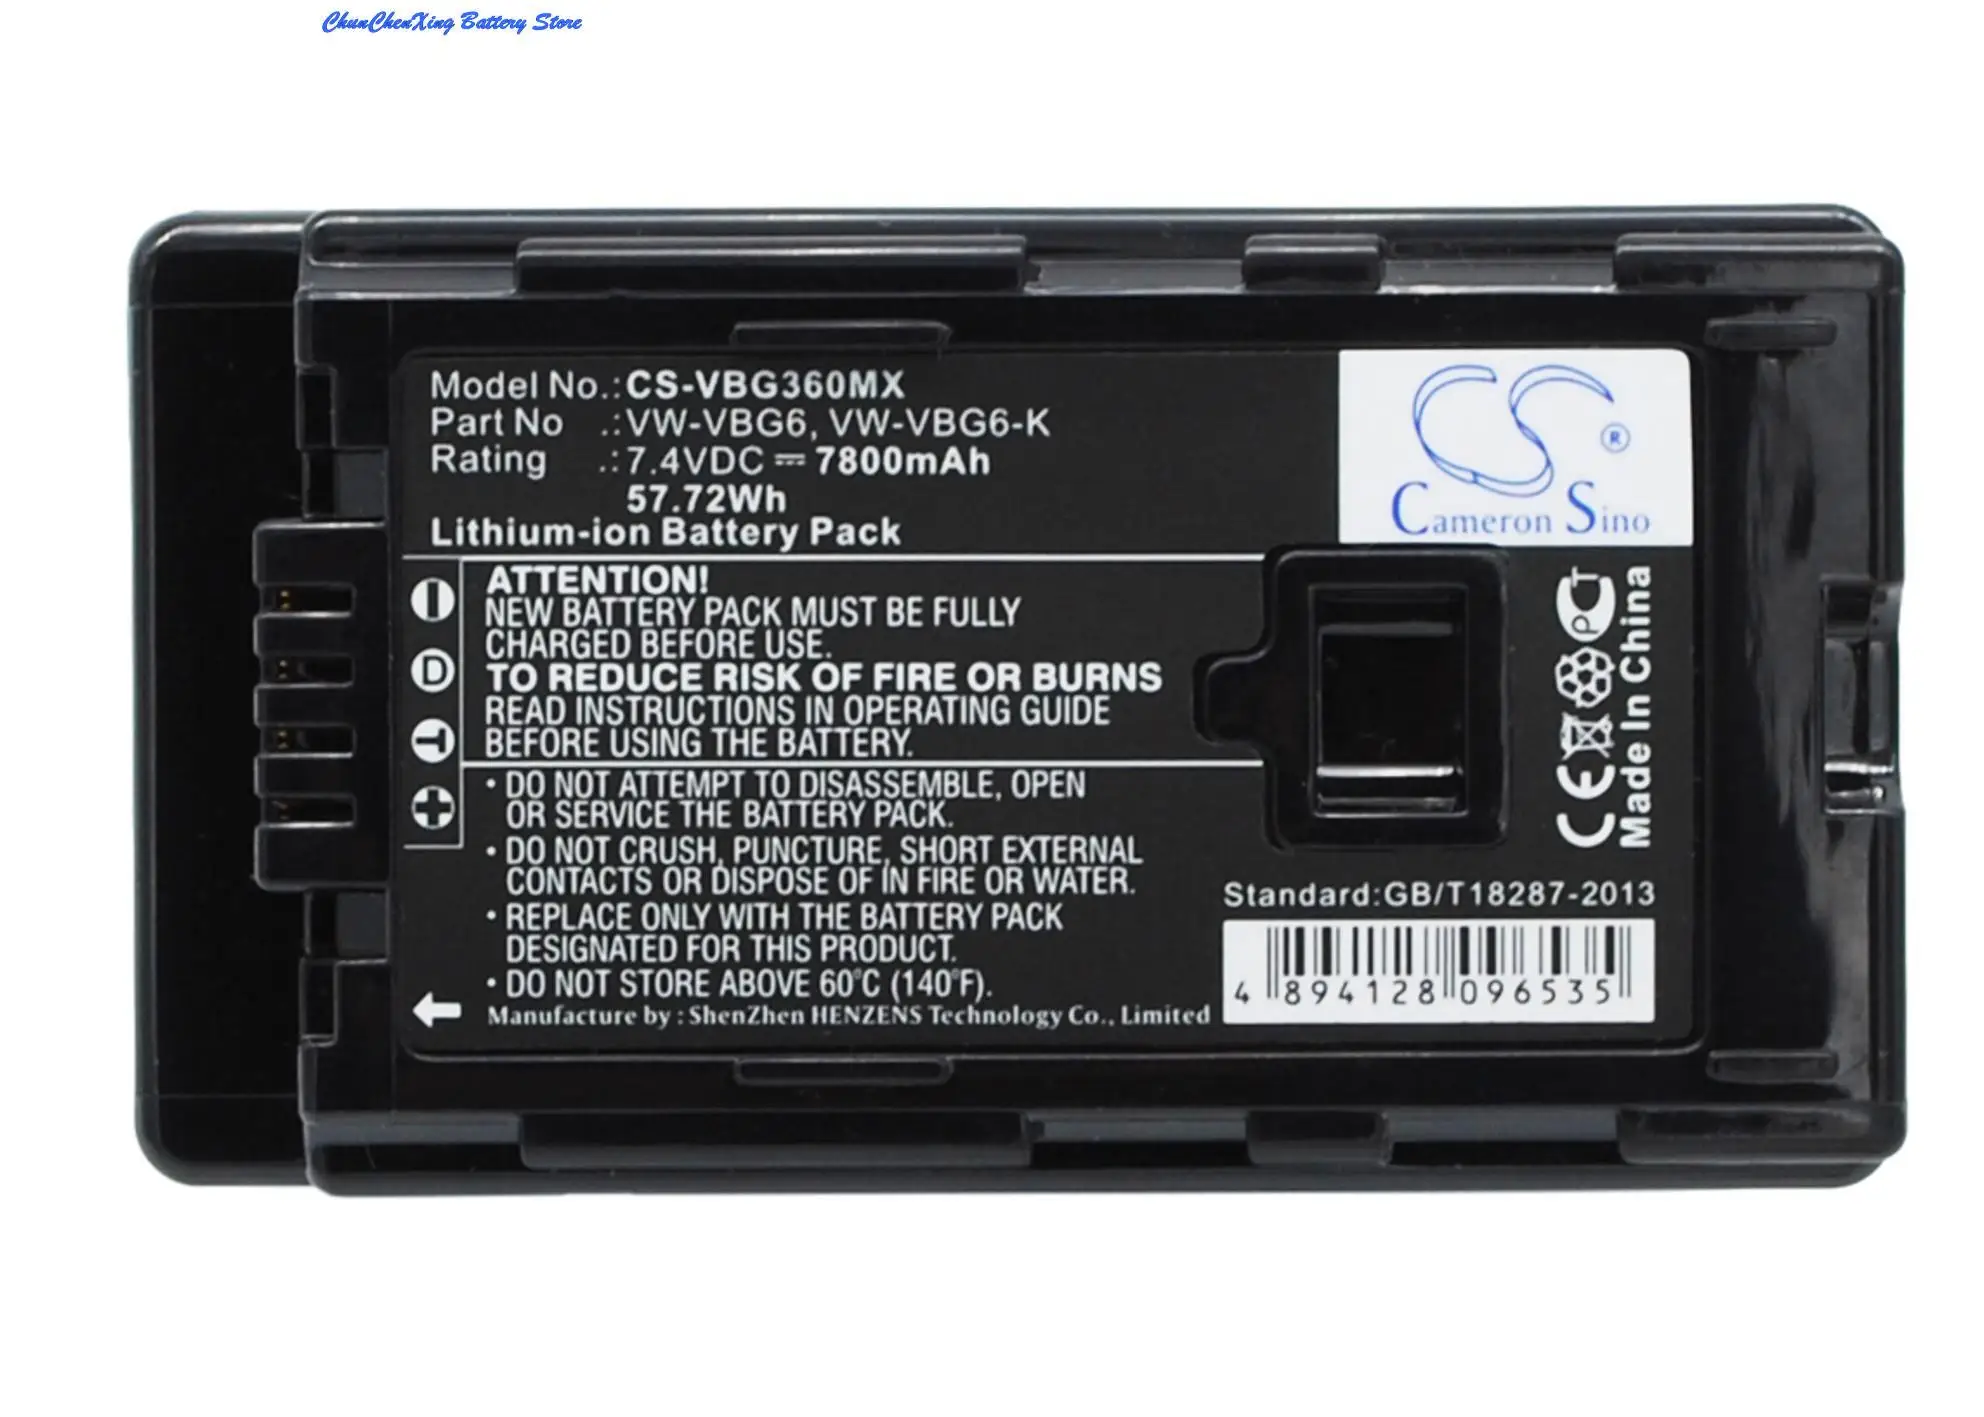 

Cameron Sino 4400mAh/7800mAh Battery for Panasonic HDC-HS300 TM300 HS250 SD100 HS100 HS20 TM20 SD20 SD9 HS9 SX5 SD5 SD600 HS200